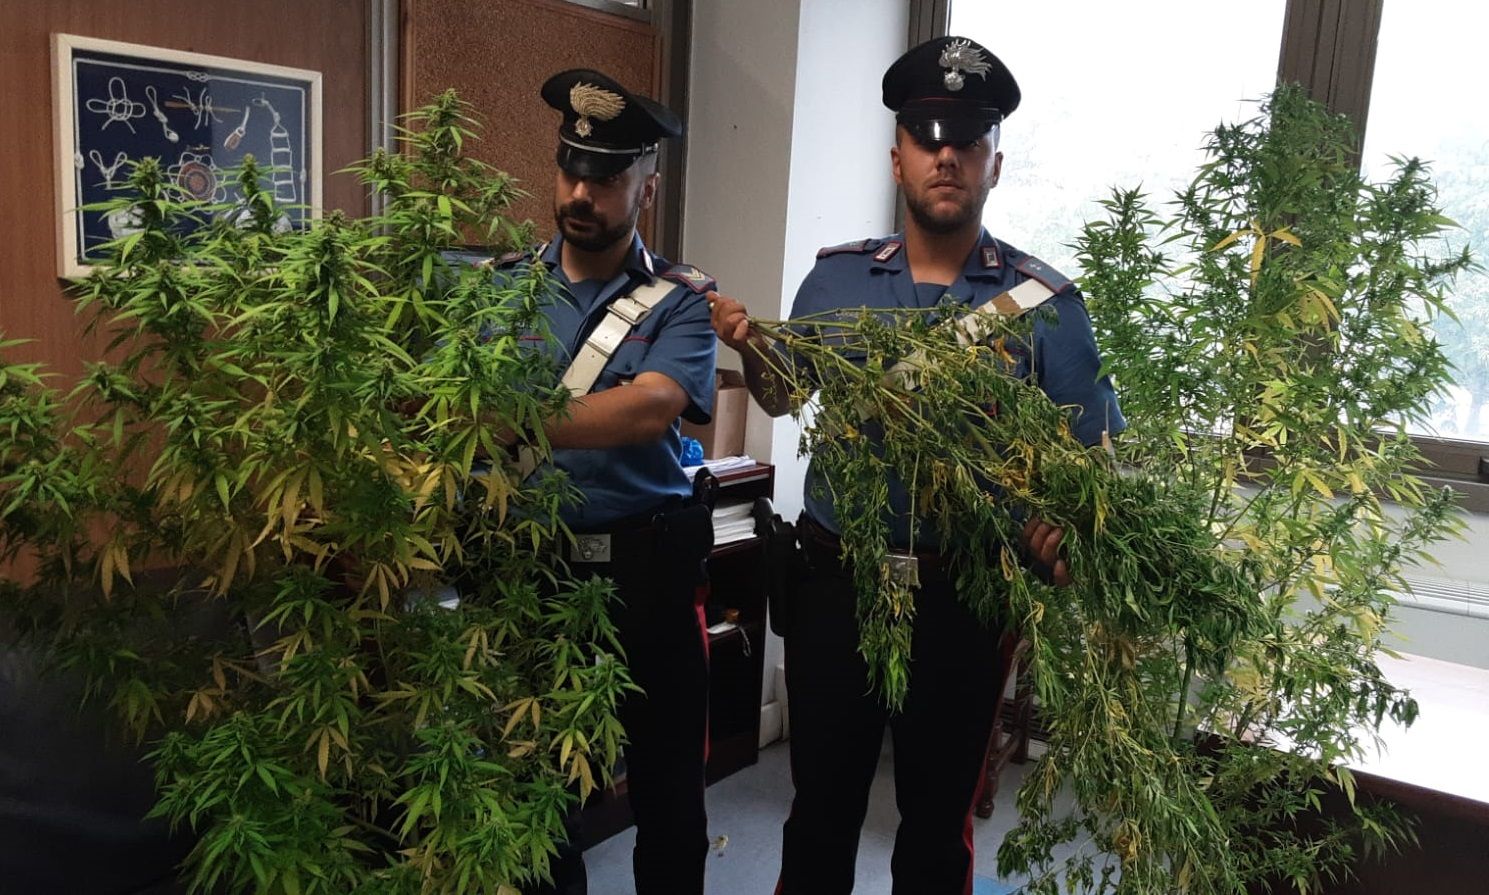 I Carabinieri sequestrano piante cannabis al Quarticciolo